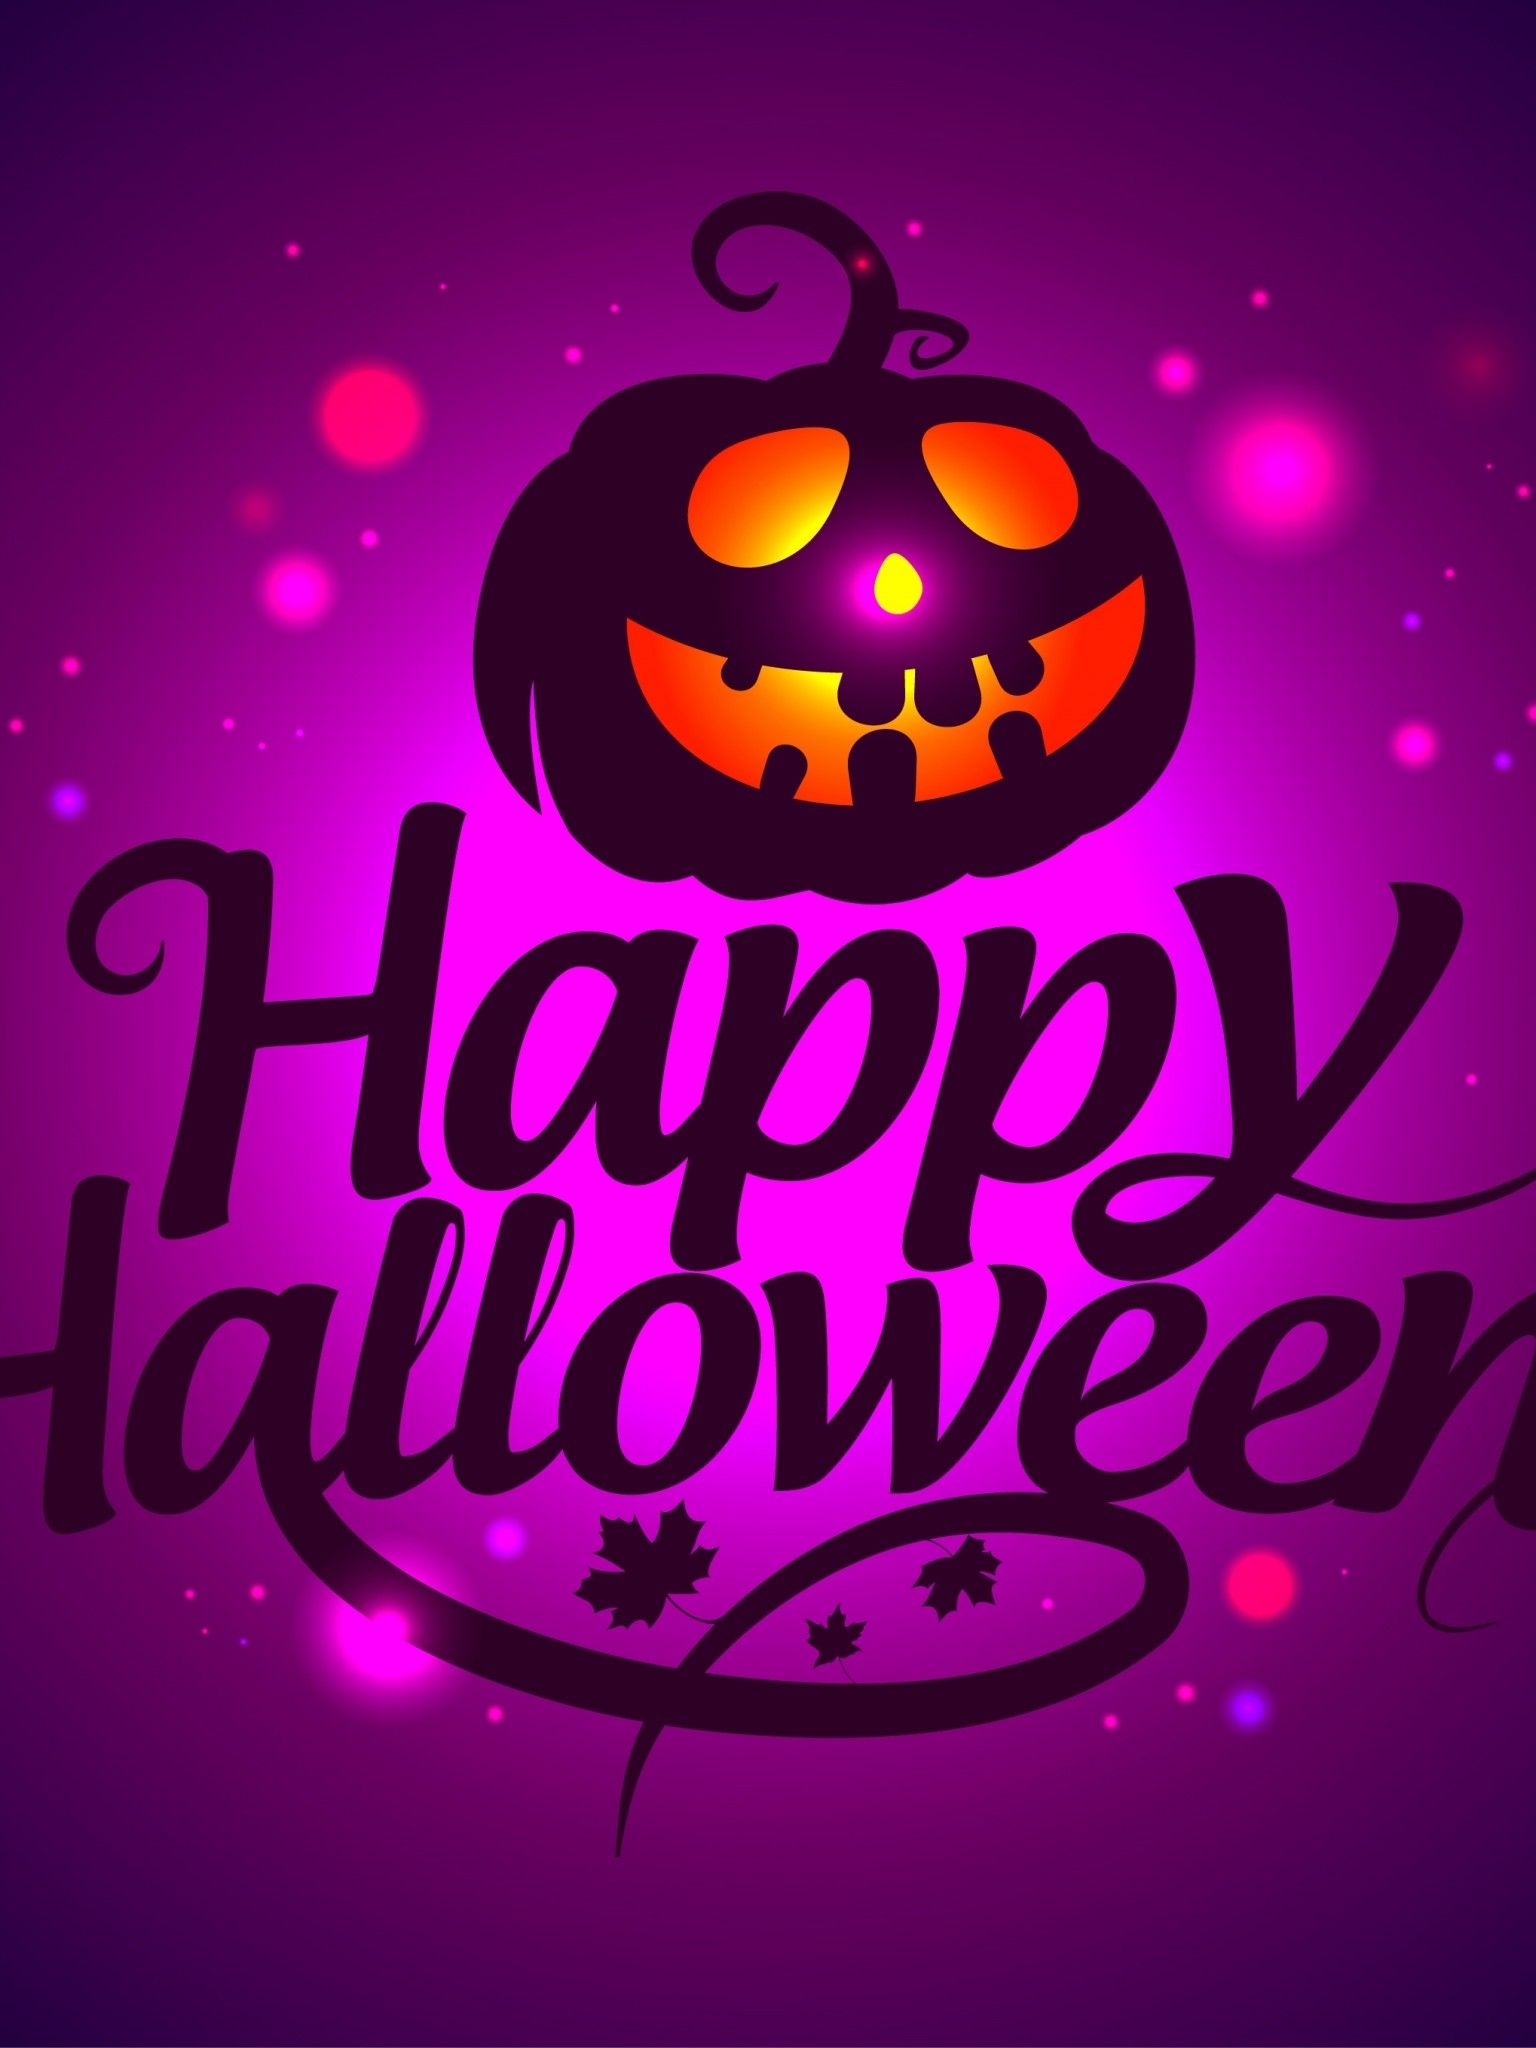 Wallpaper Happy Halloween, 4K, Celebrations / Halloween,. Wallpaper for iPhone, Android, Mobile and Desktop